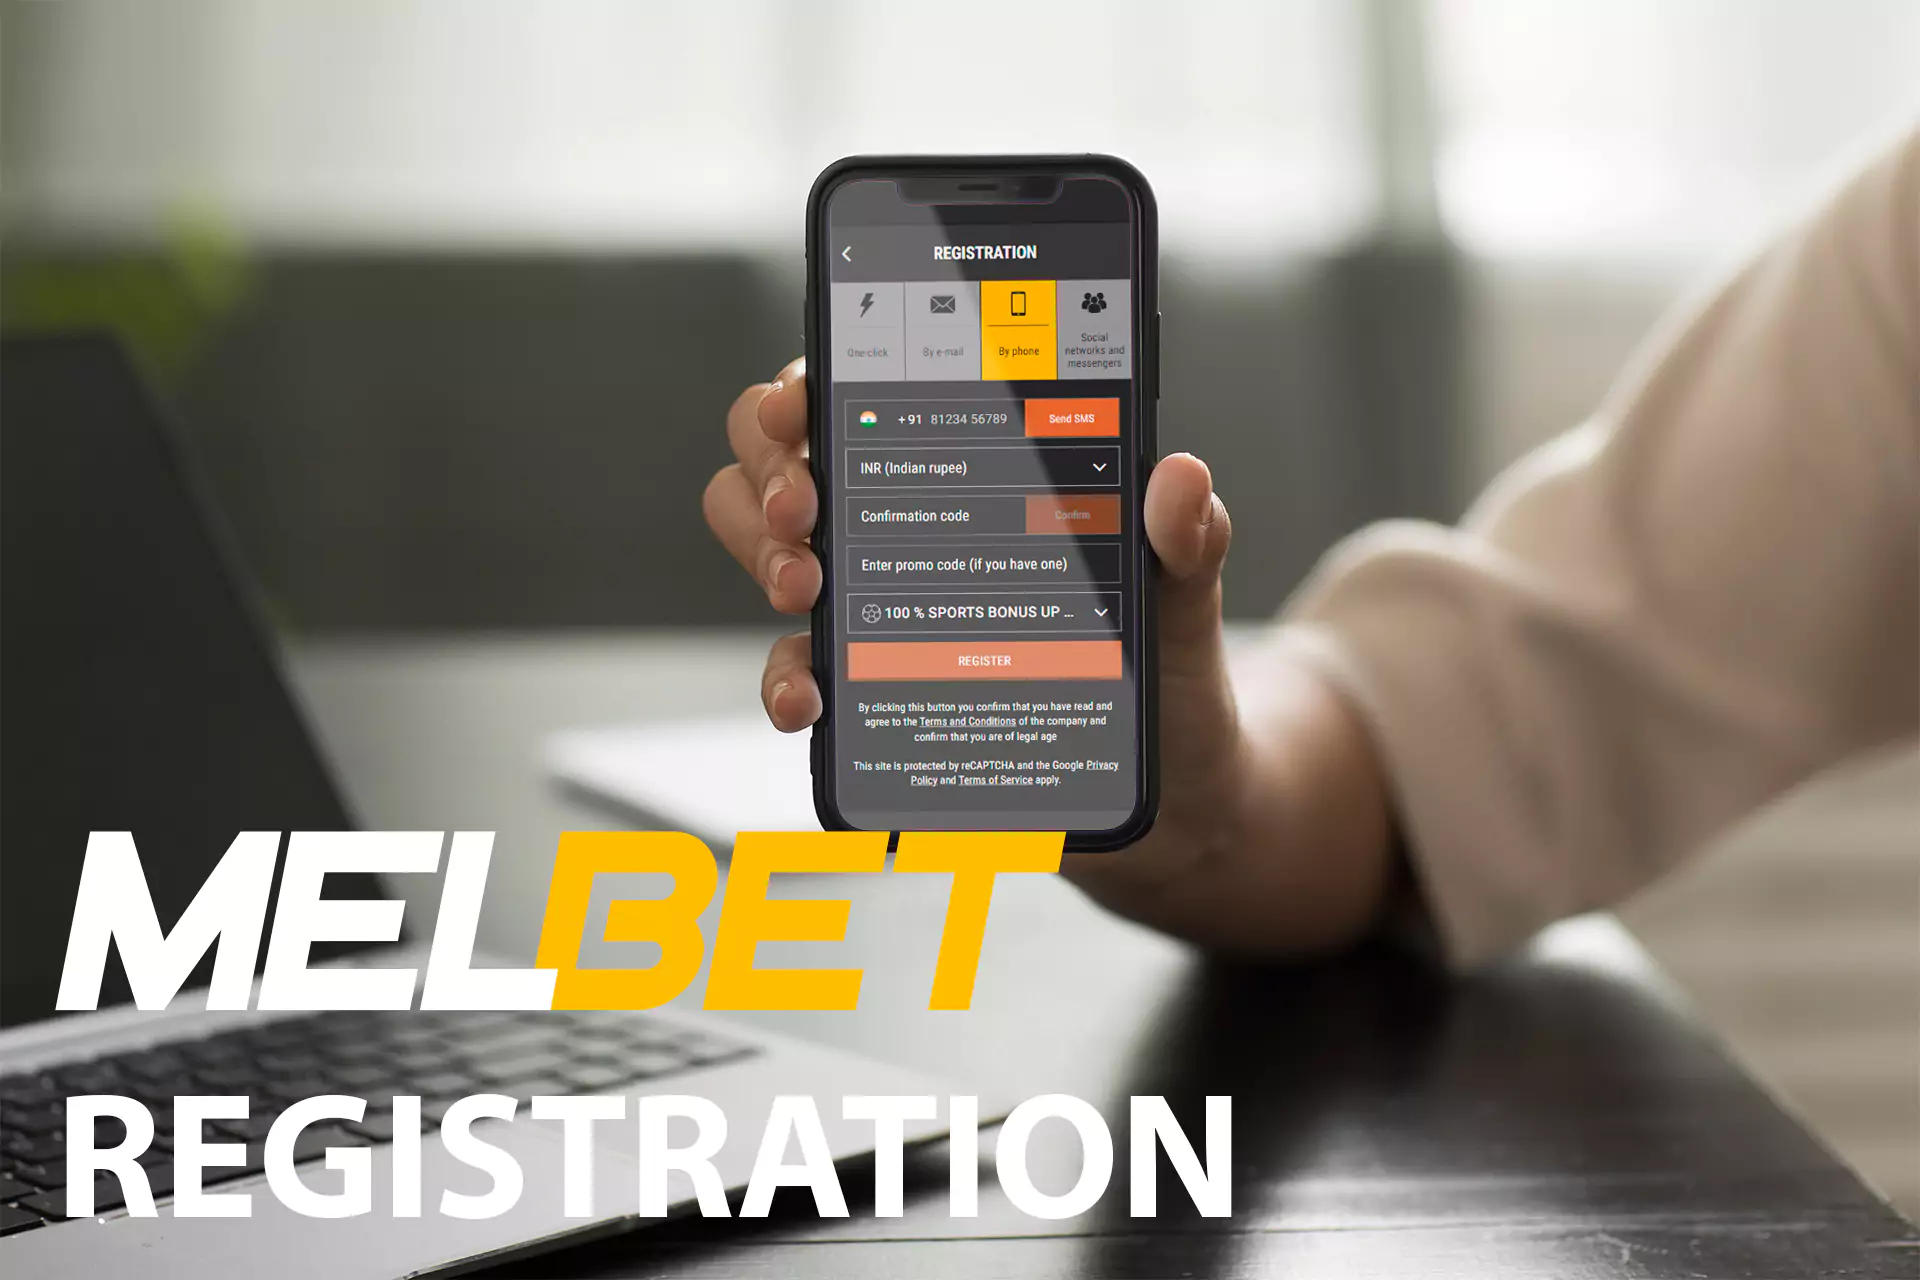 You can also register to Melbet via the Andoird or iOS app.